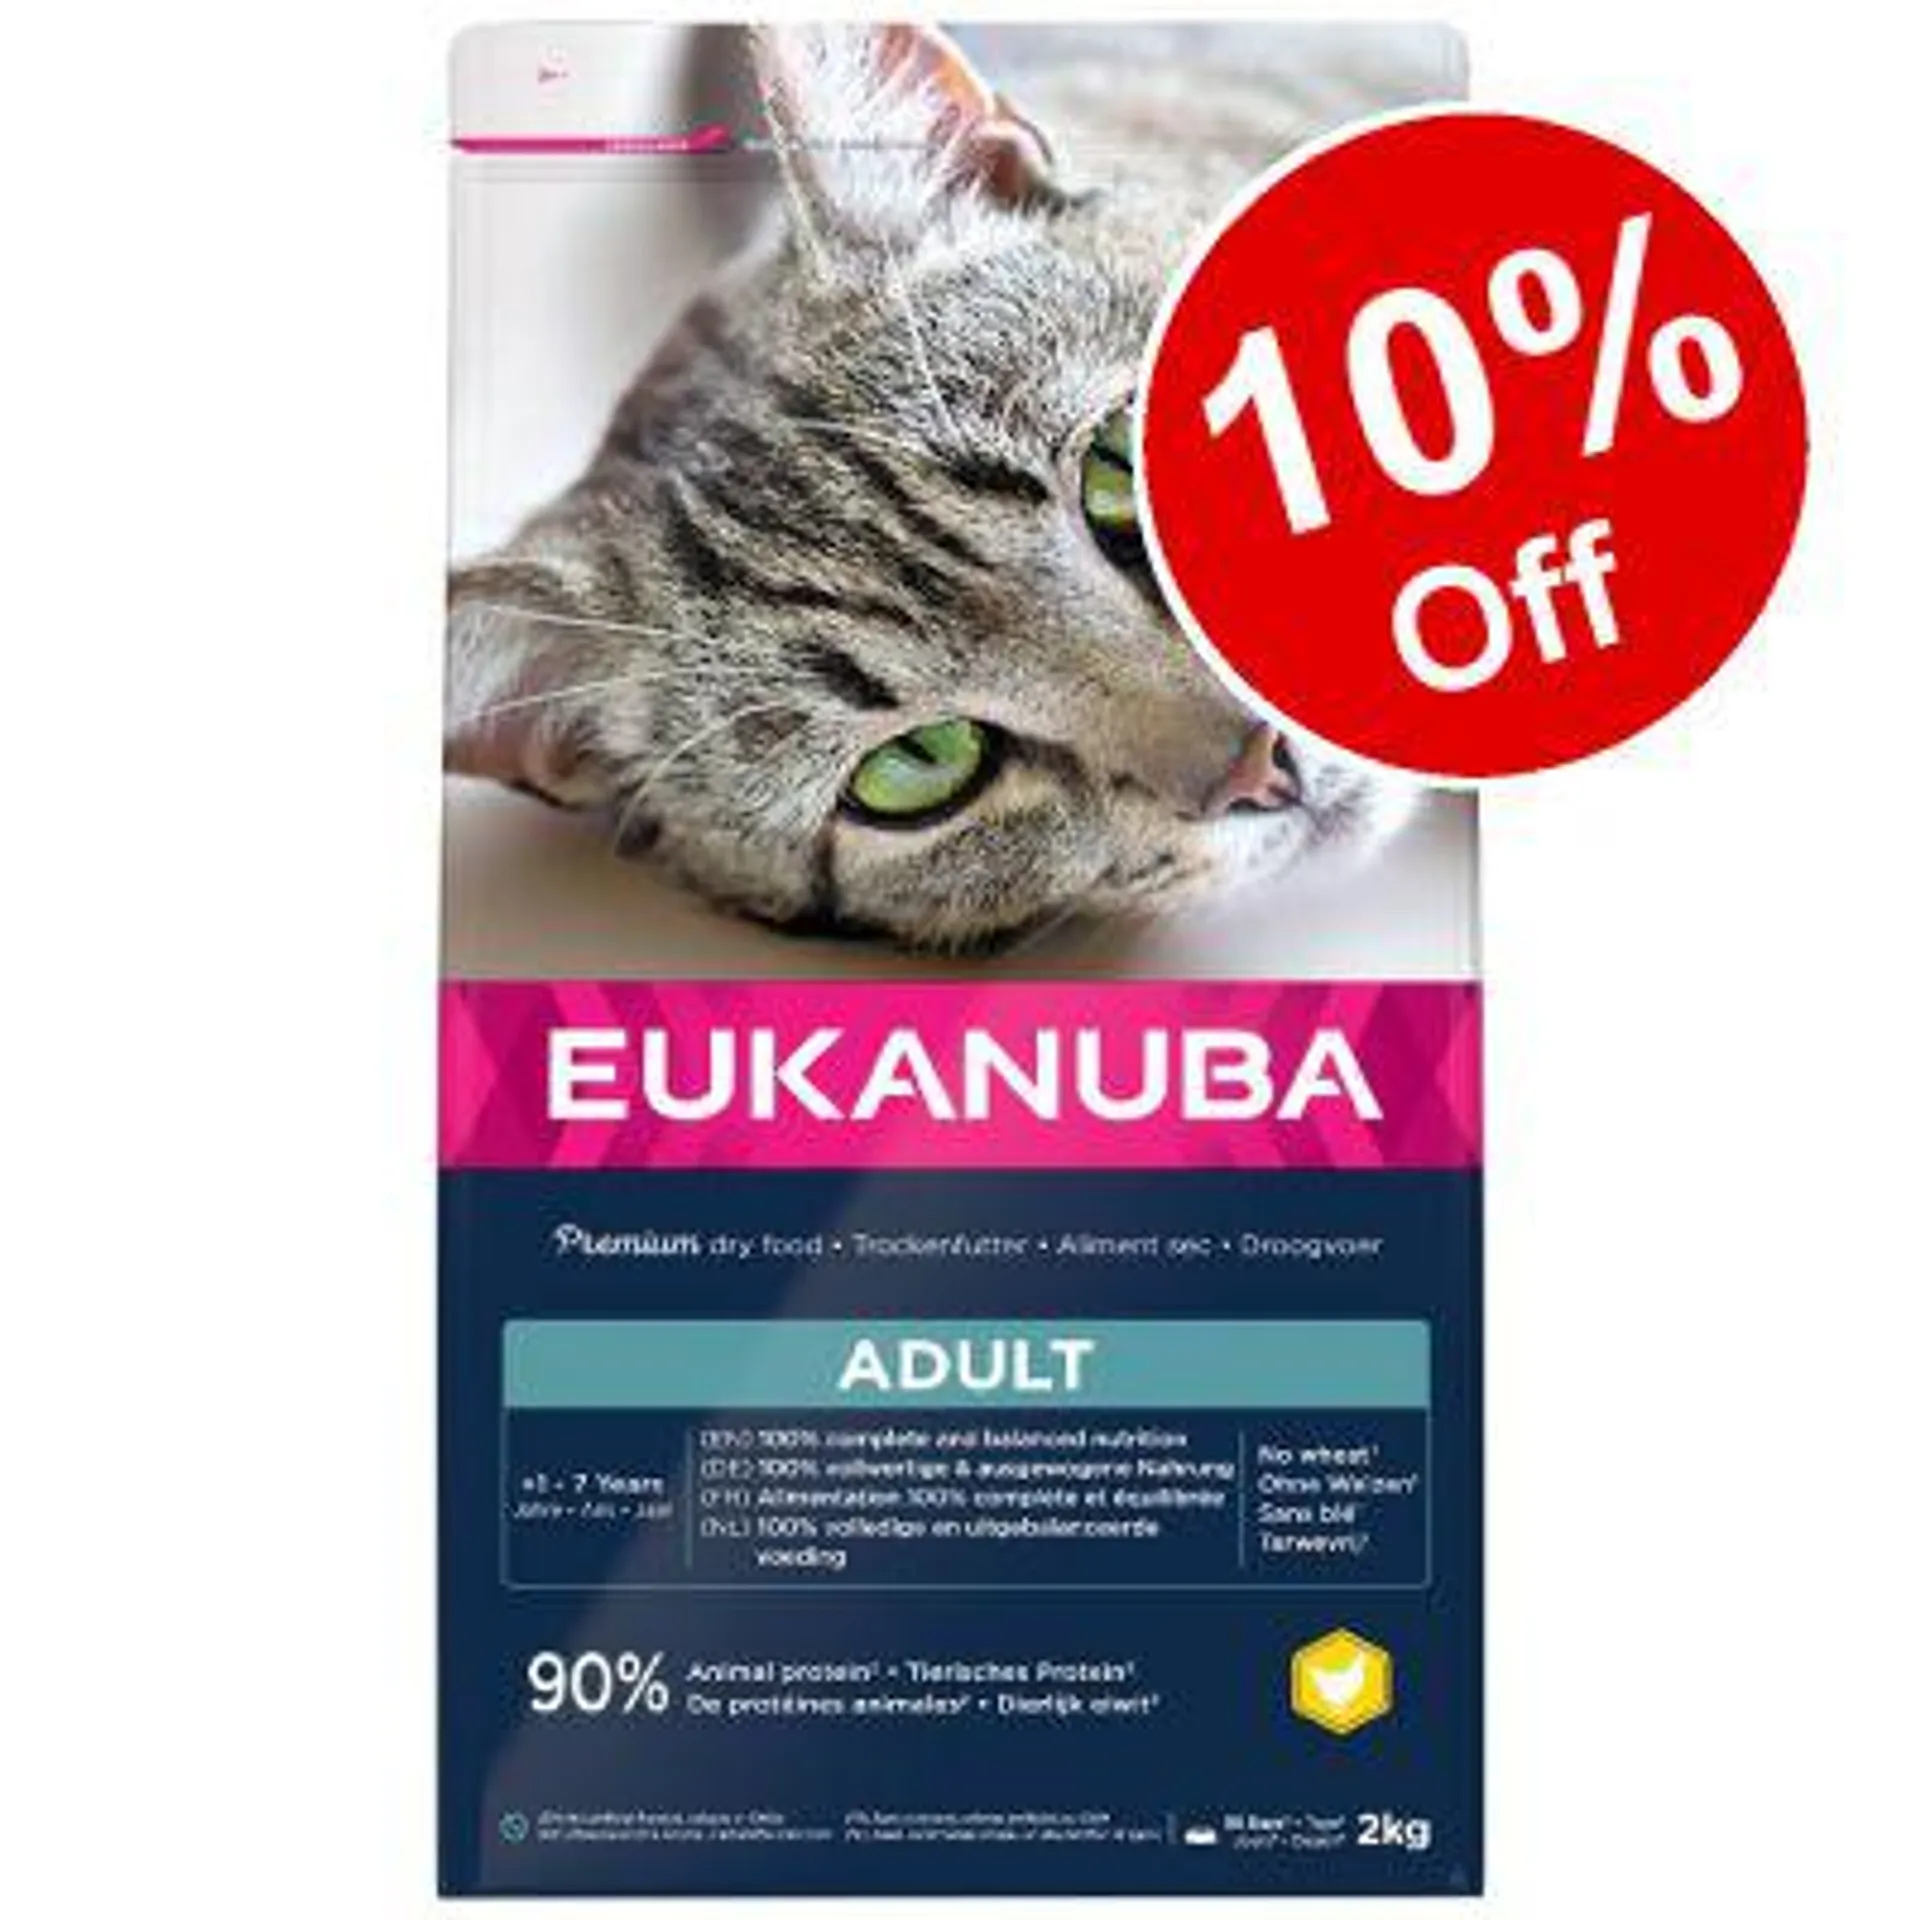 2kg Eukanuba Dry Cat Food - 10% Off!*